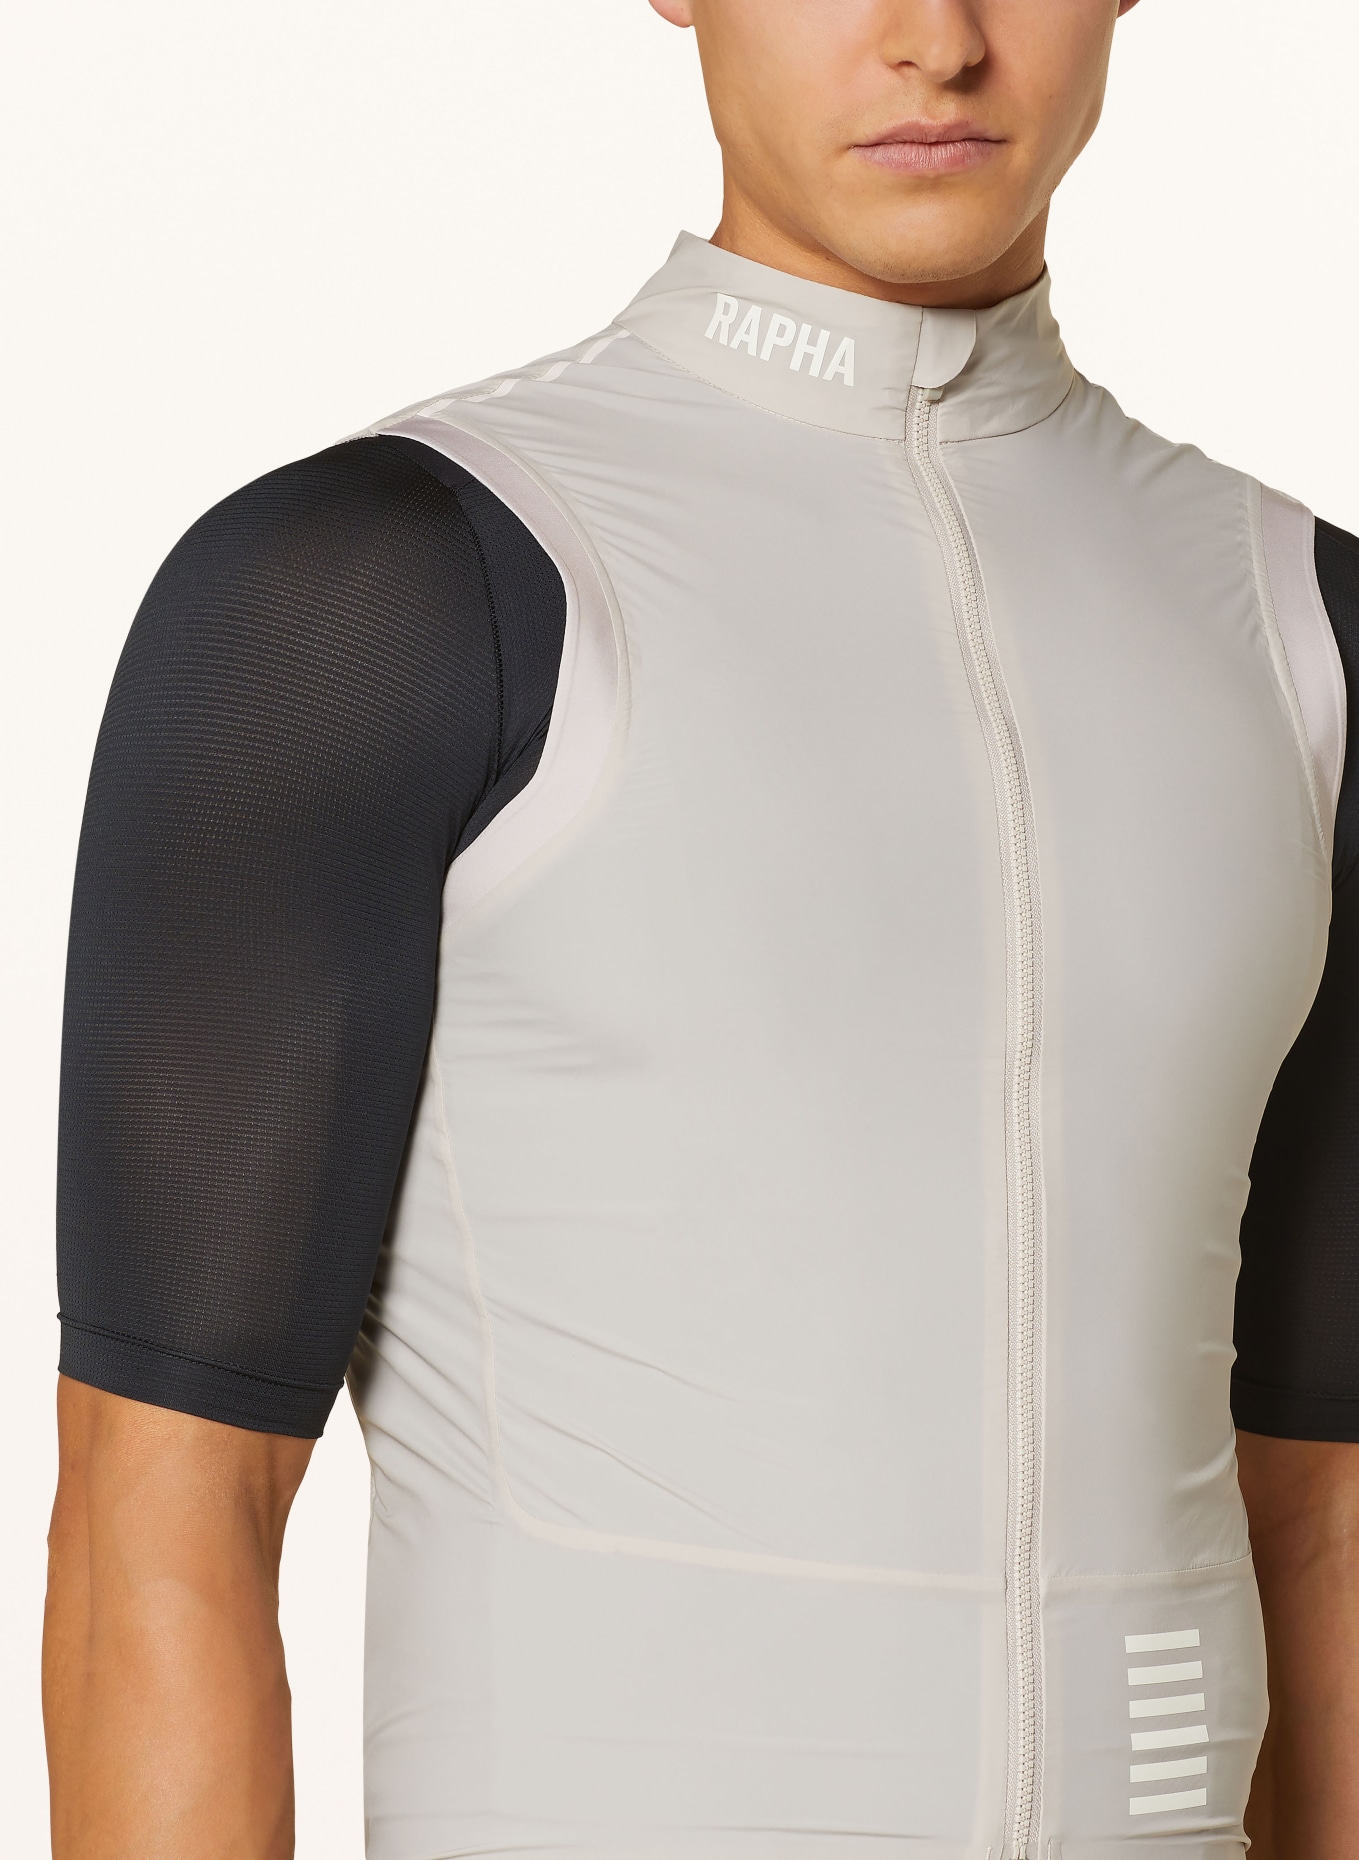 Rapha Cycling vest PRO TEAM, Color: LIGHT GRAY (Image 4)